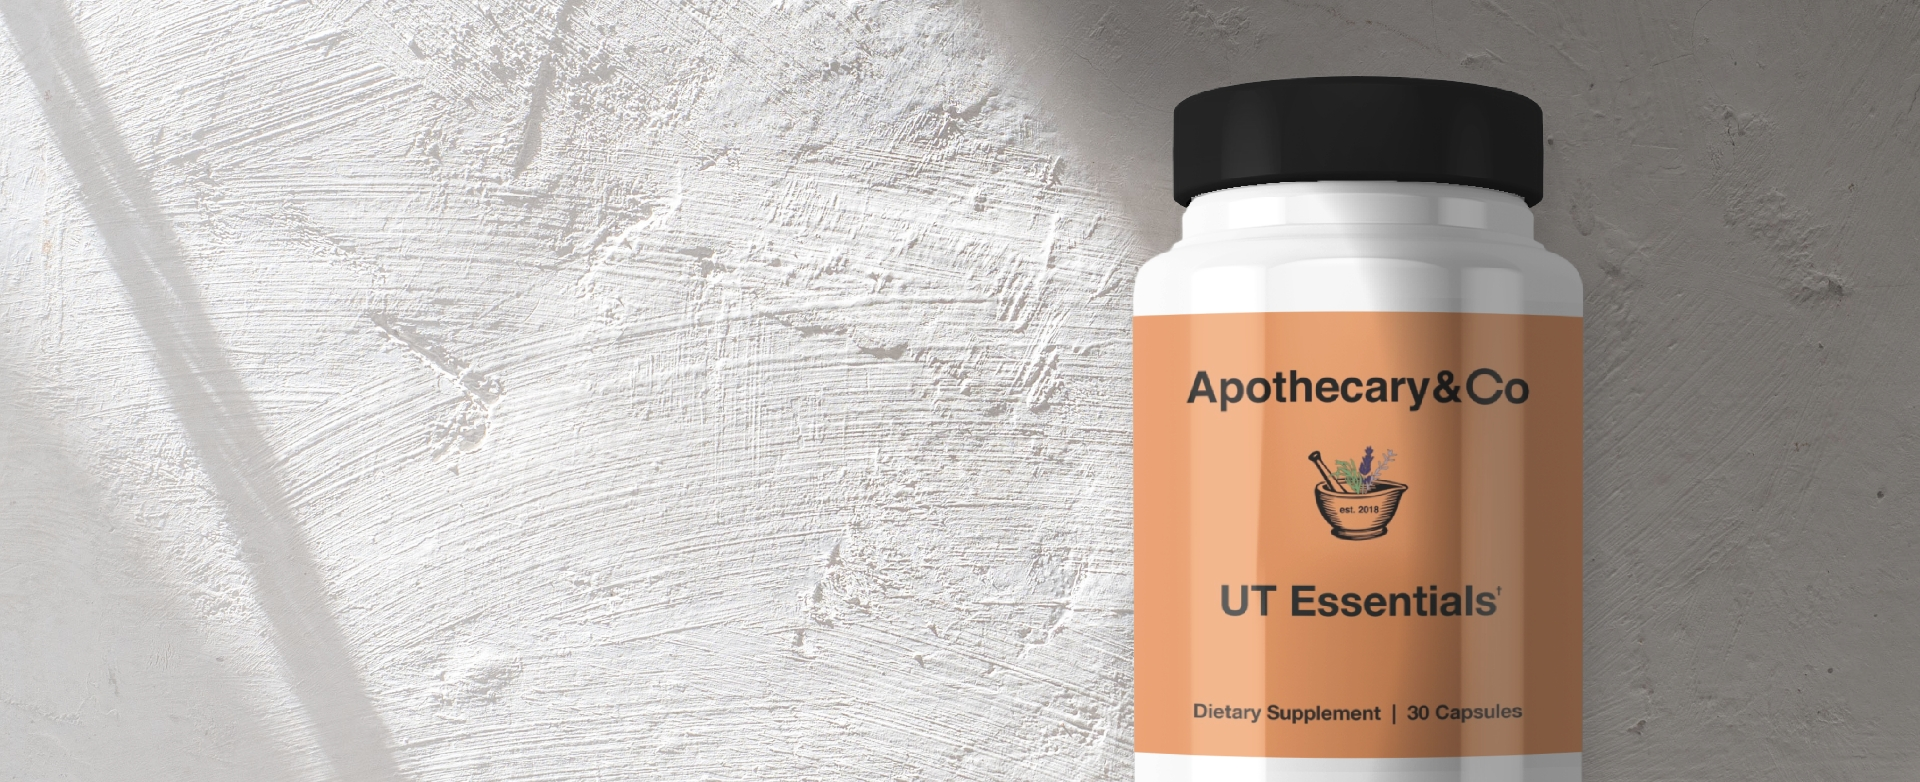 Apothecary & Co UT Essentials